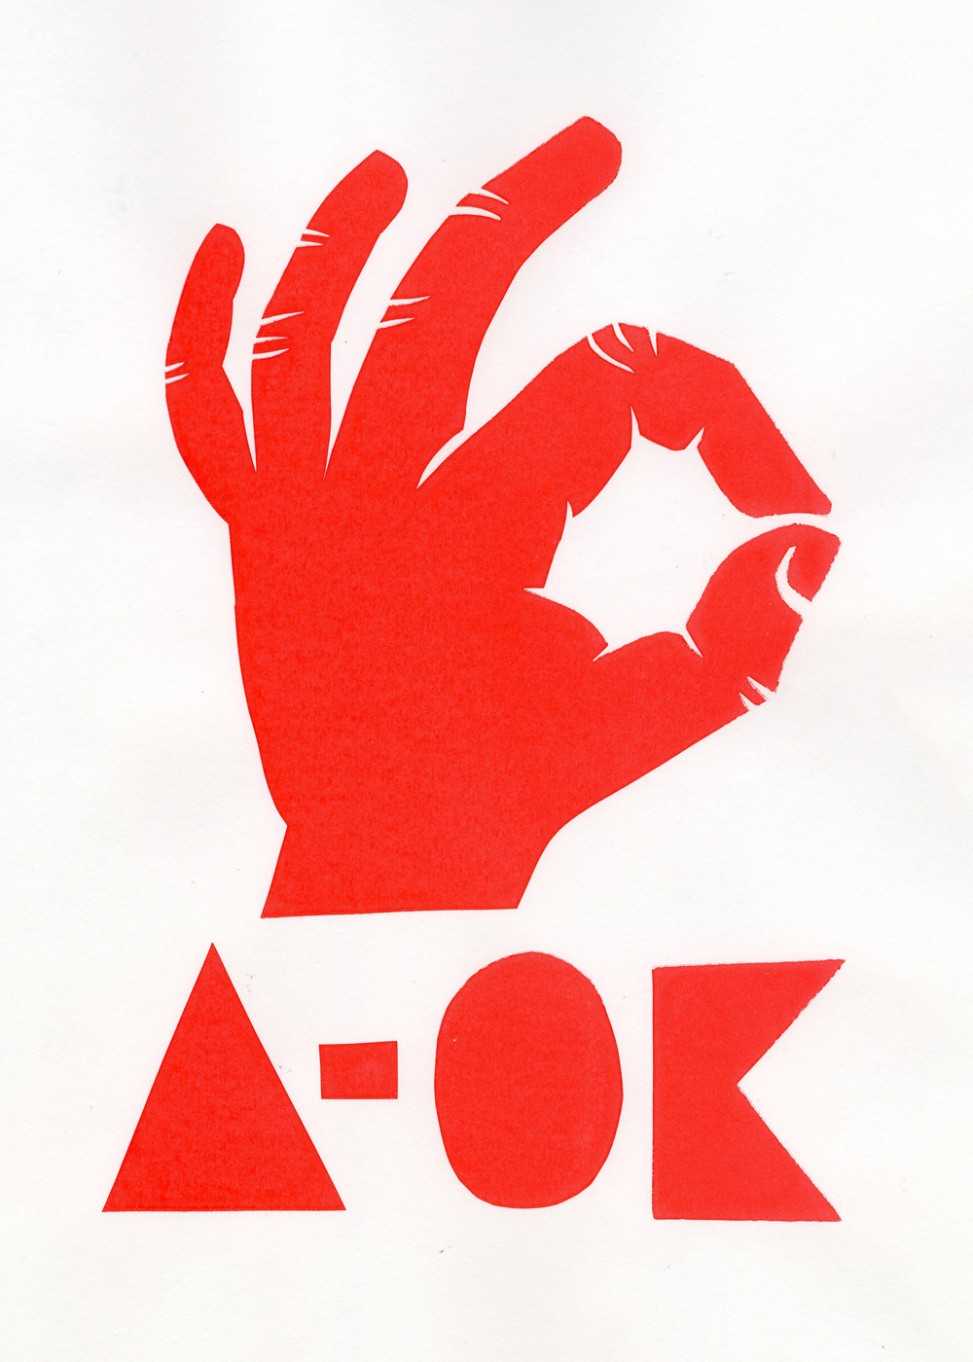 a-ok hand symbol screen print by matt johnson